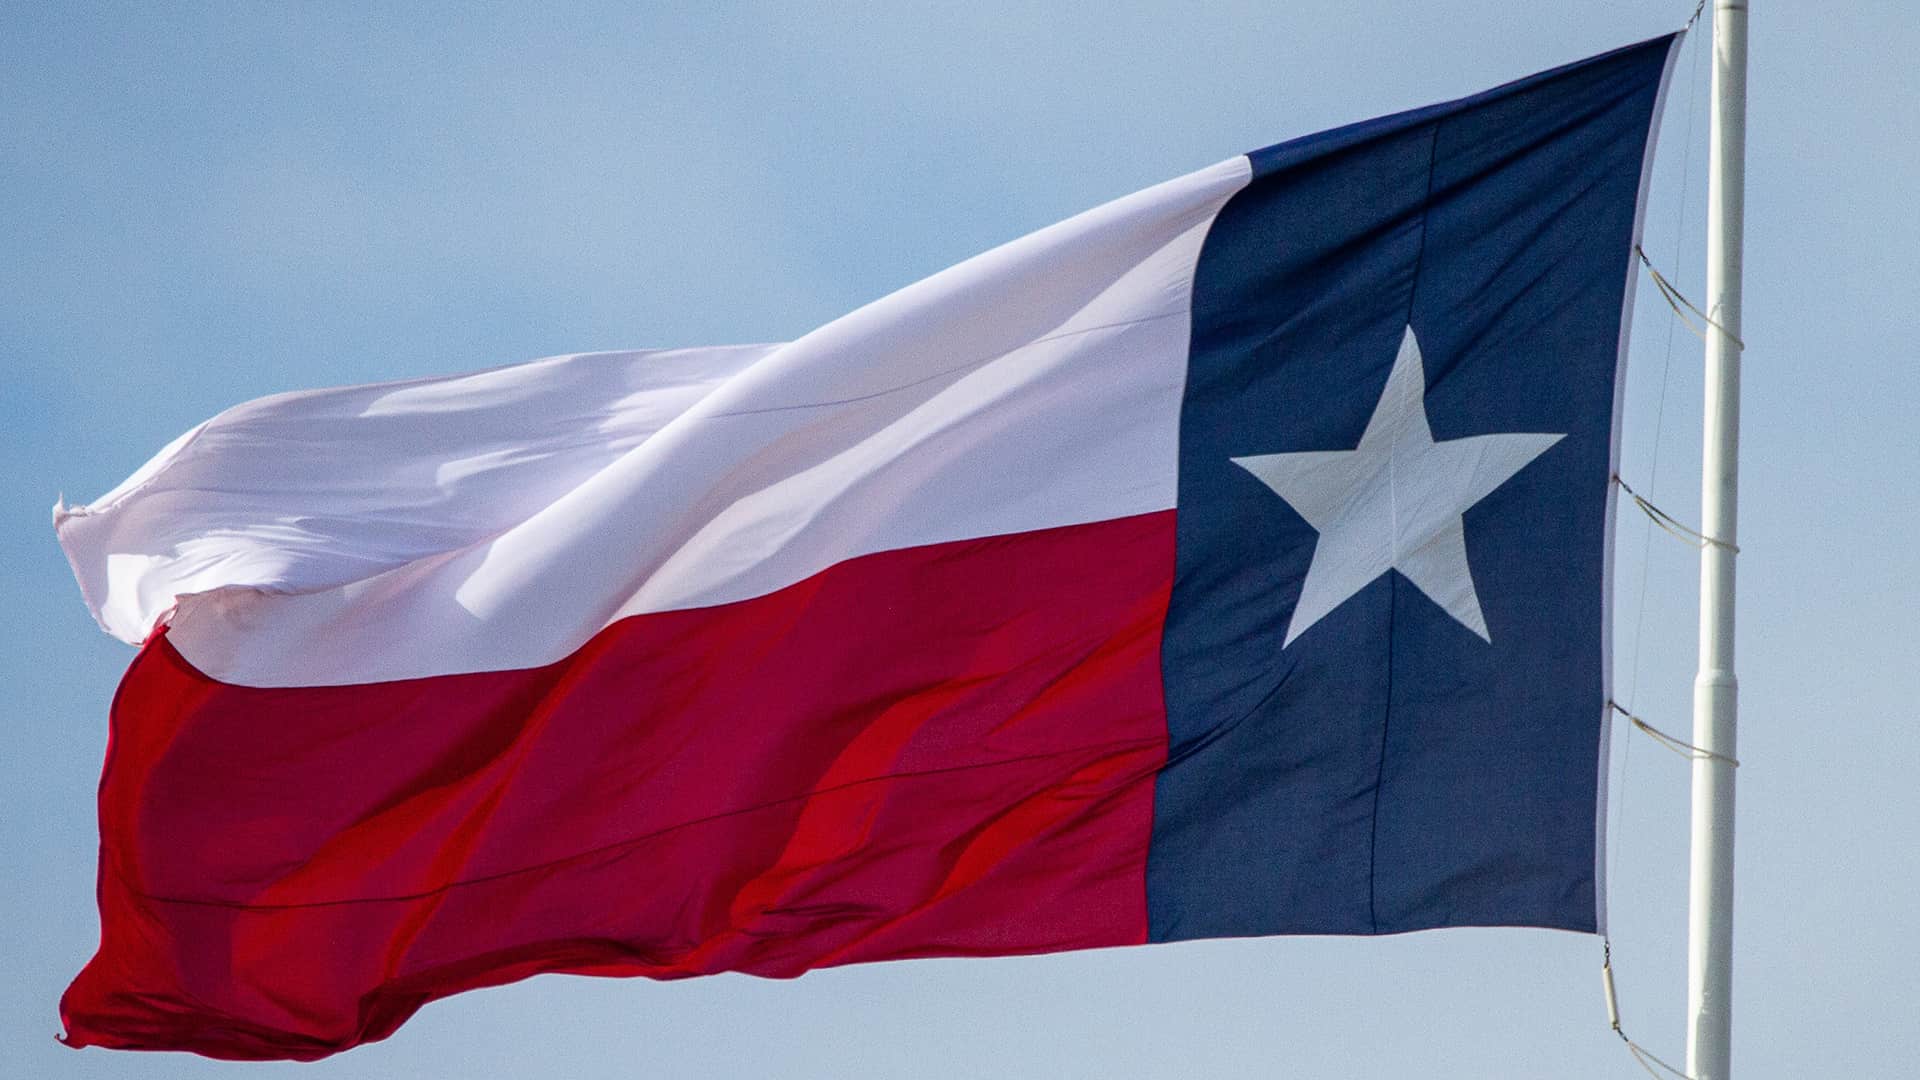 Texas Flag Background